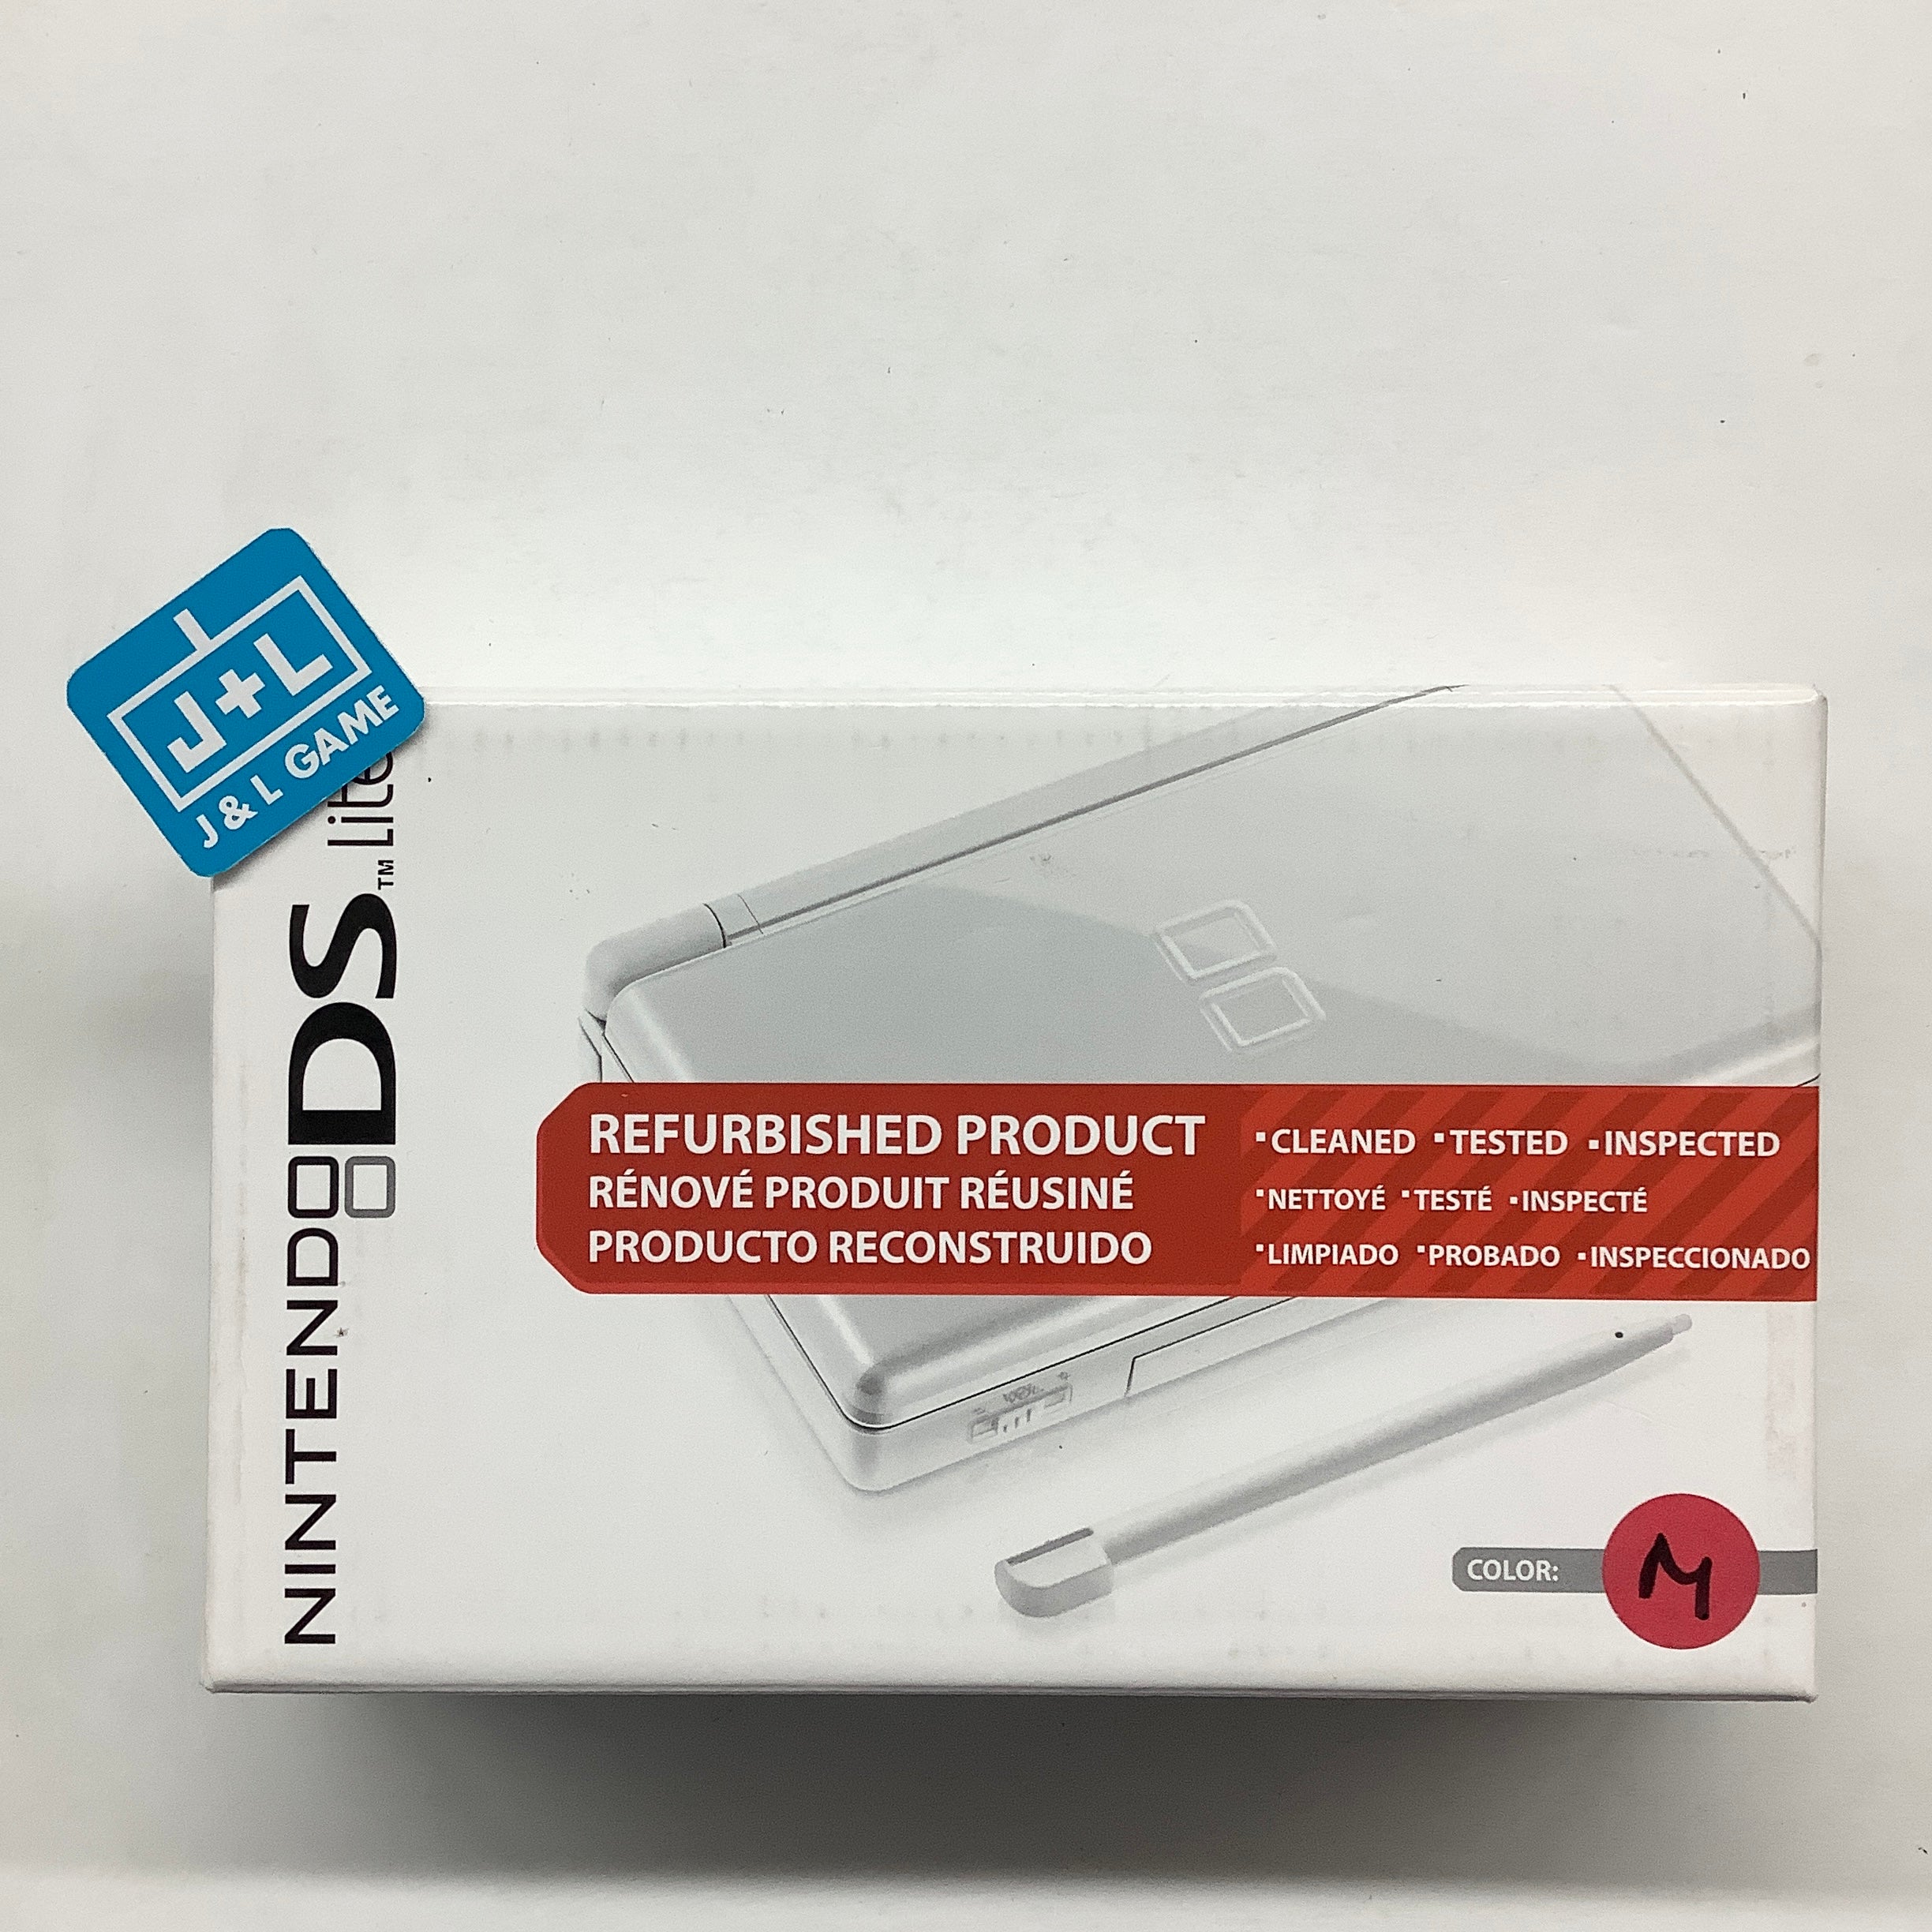 Nintendo DS Lite Console Handheld System Mario Red ( Nintendo Refurbished ) - (NDS) Nintendo DS Consoles Nintendo   